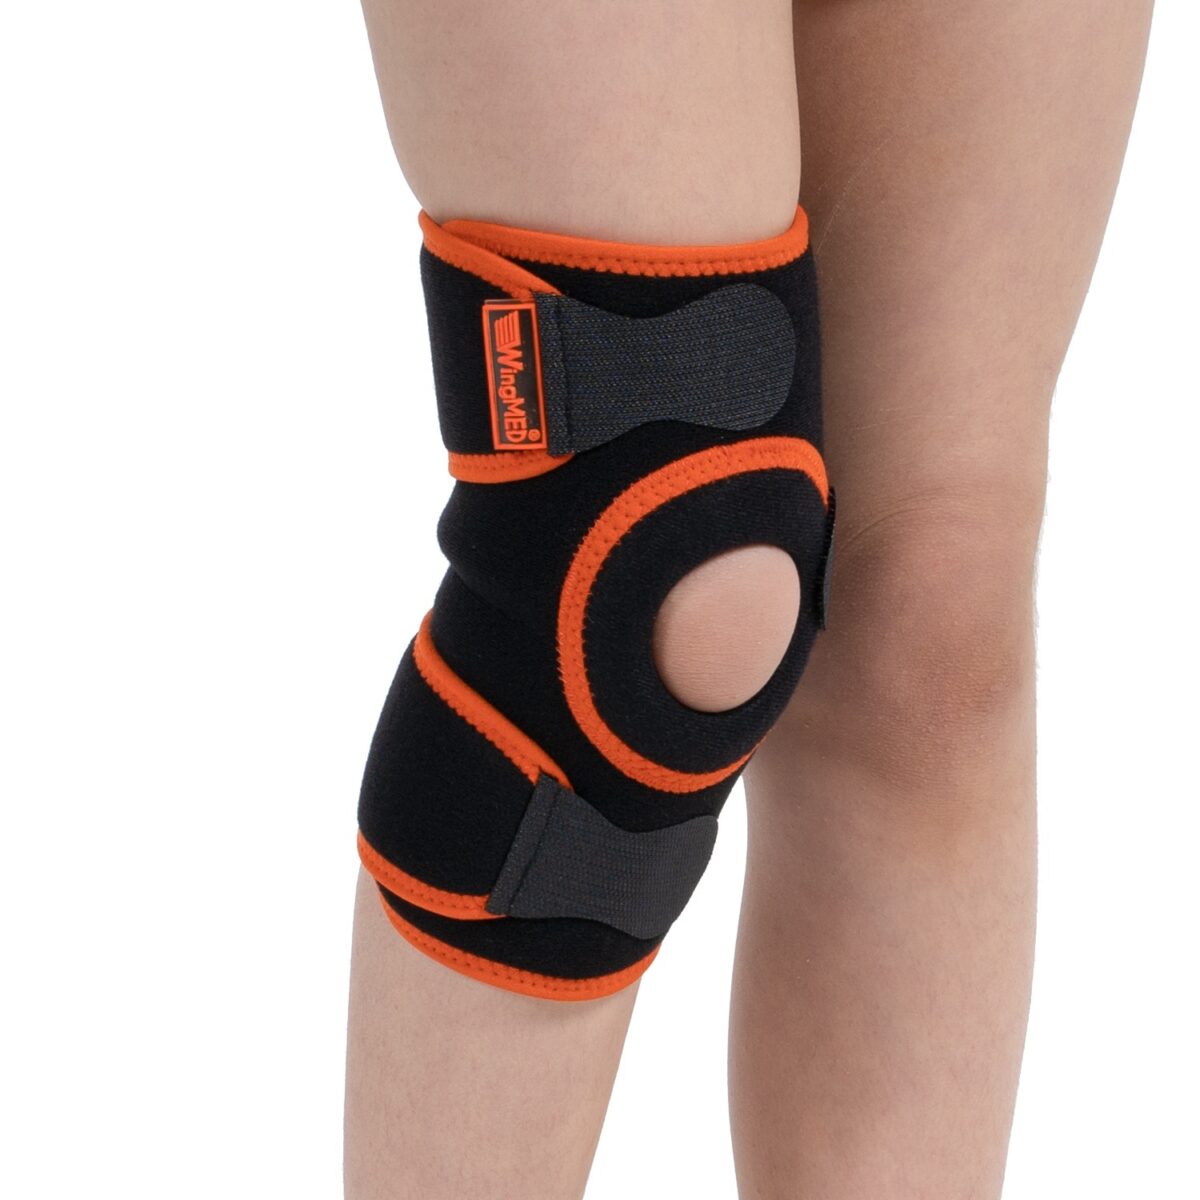 wingmed orthopedic equipments W917 patella knee support 97